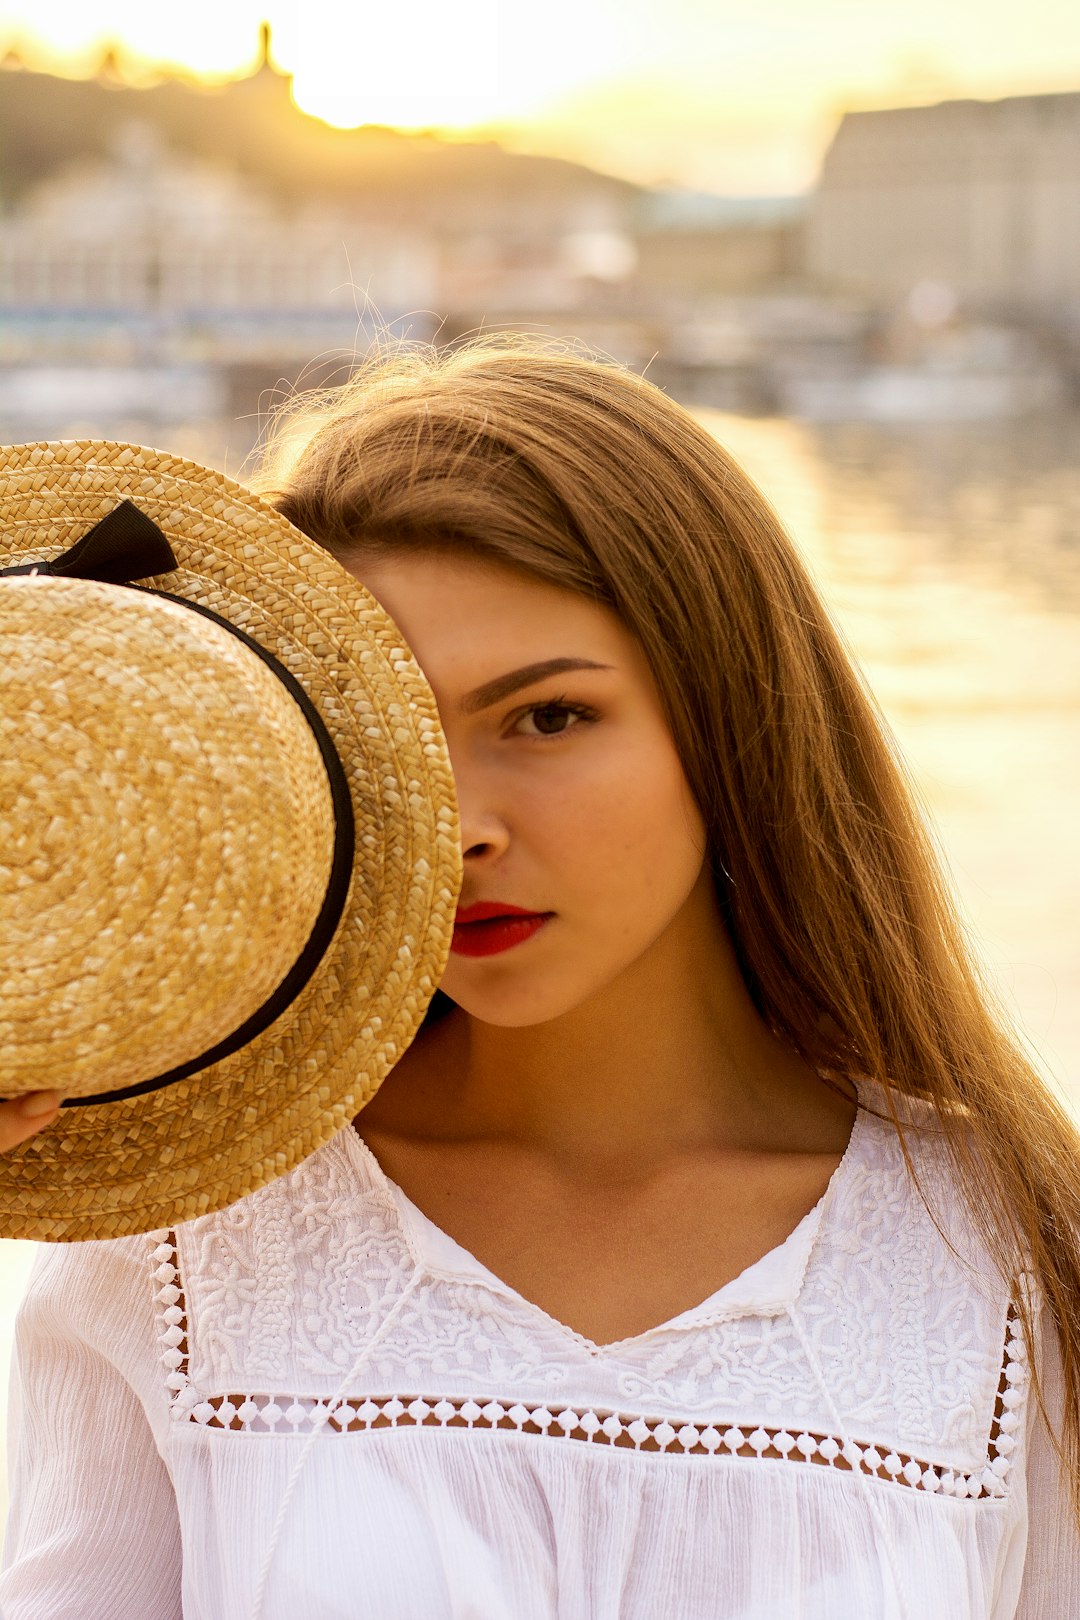 woman in white shirt wearing brown sun hat